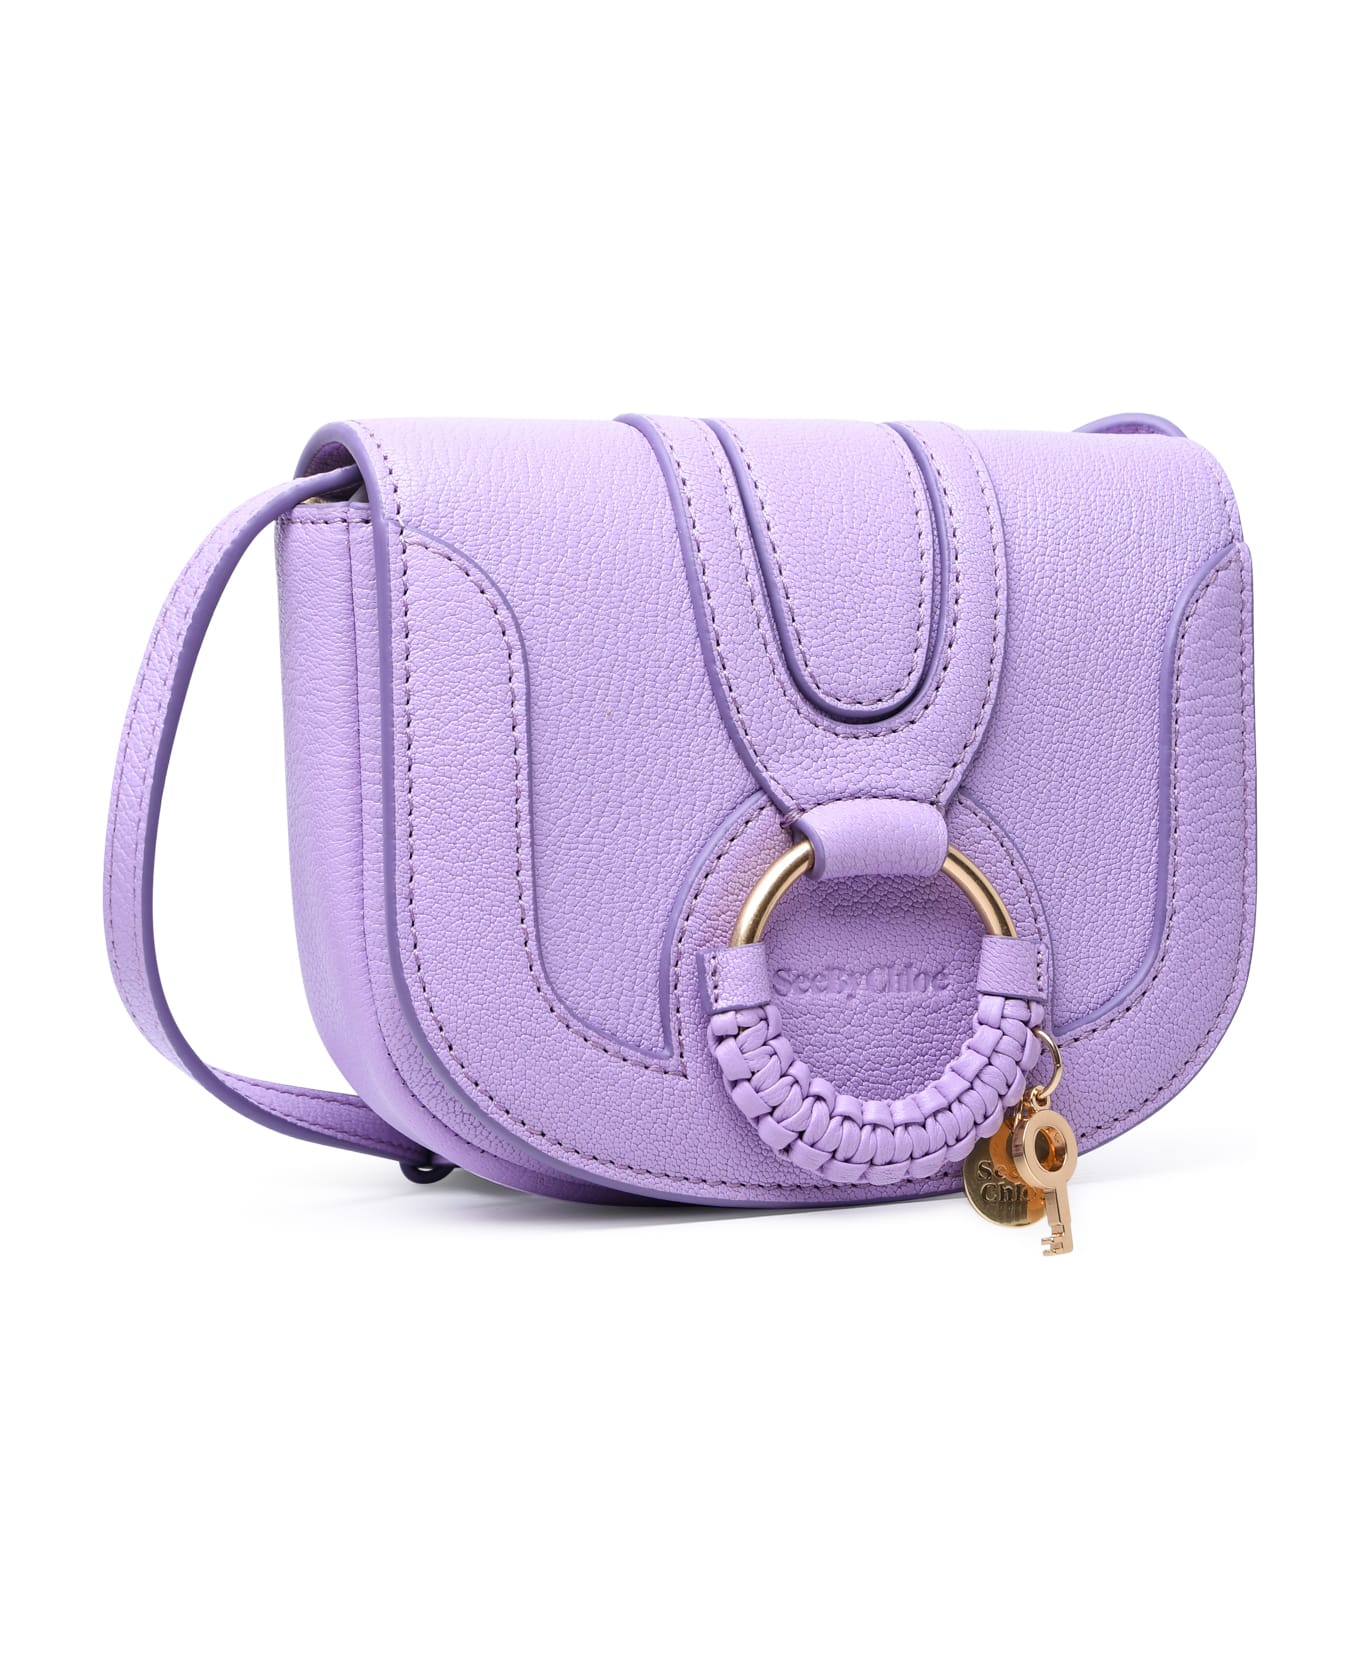 See by Chloé 'hana' Small Lilac Leather Bag - Liliac